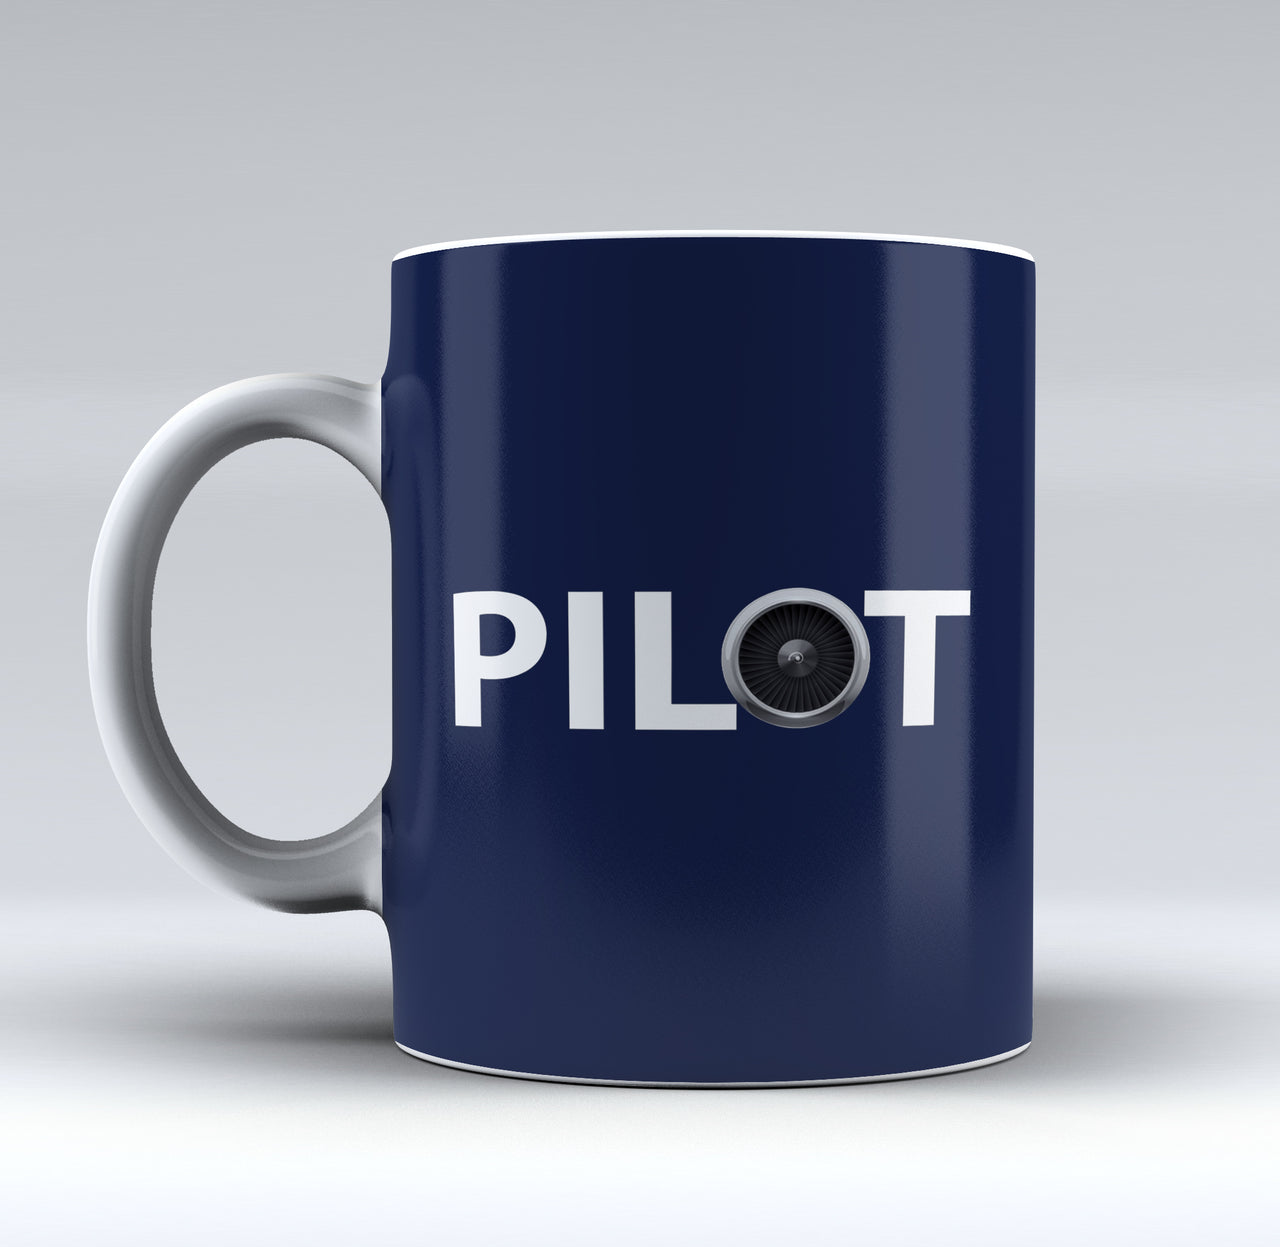 Pilot & Jet Engine Designed Mugs